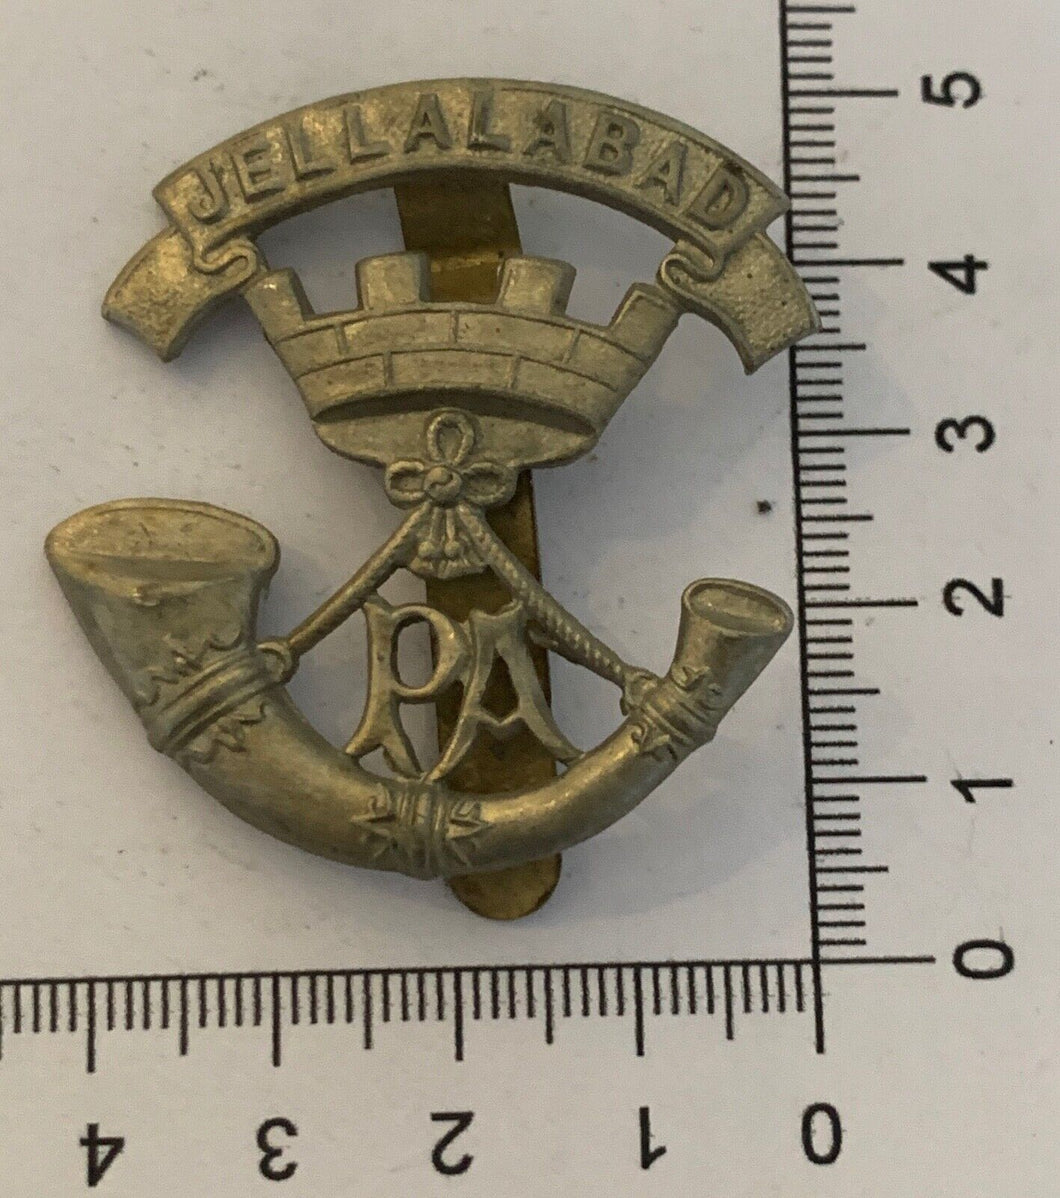 WW1 / WW2 British Army - SOMERSET LIGHT INFANTRY white metal cap badge - nice